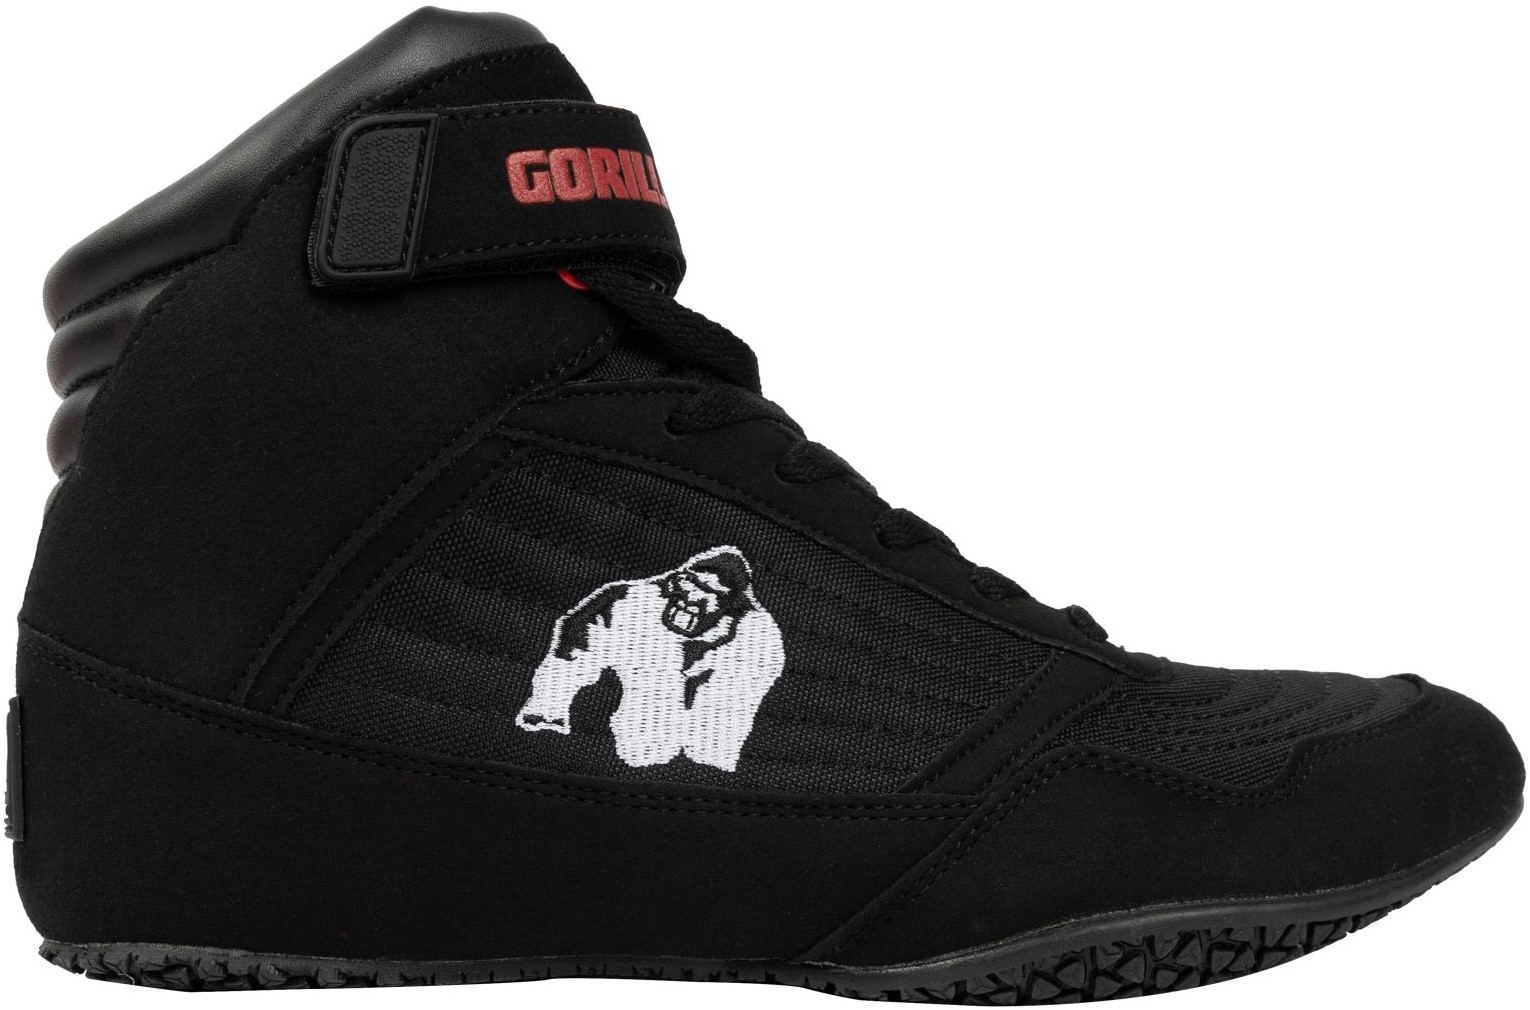 IQ/GORILLA WEAR Gorilla Wear HIGH TOPS - Weight Lifting Shoes